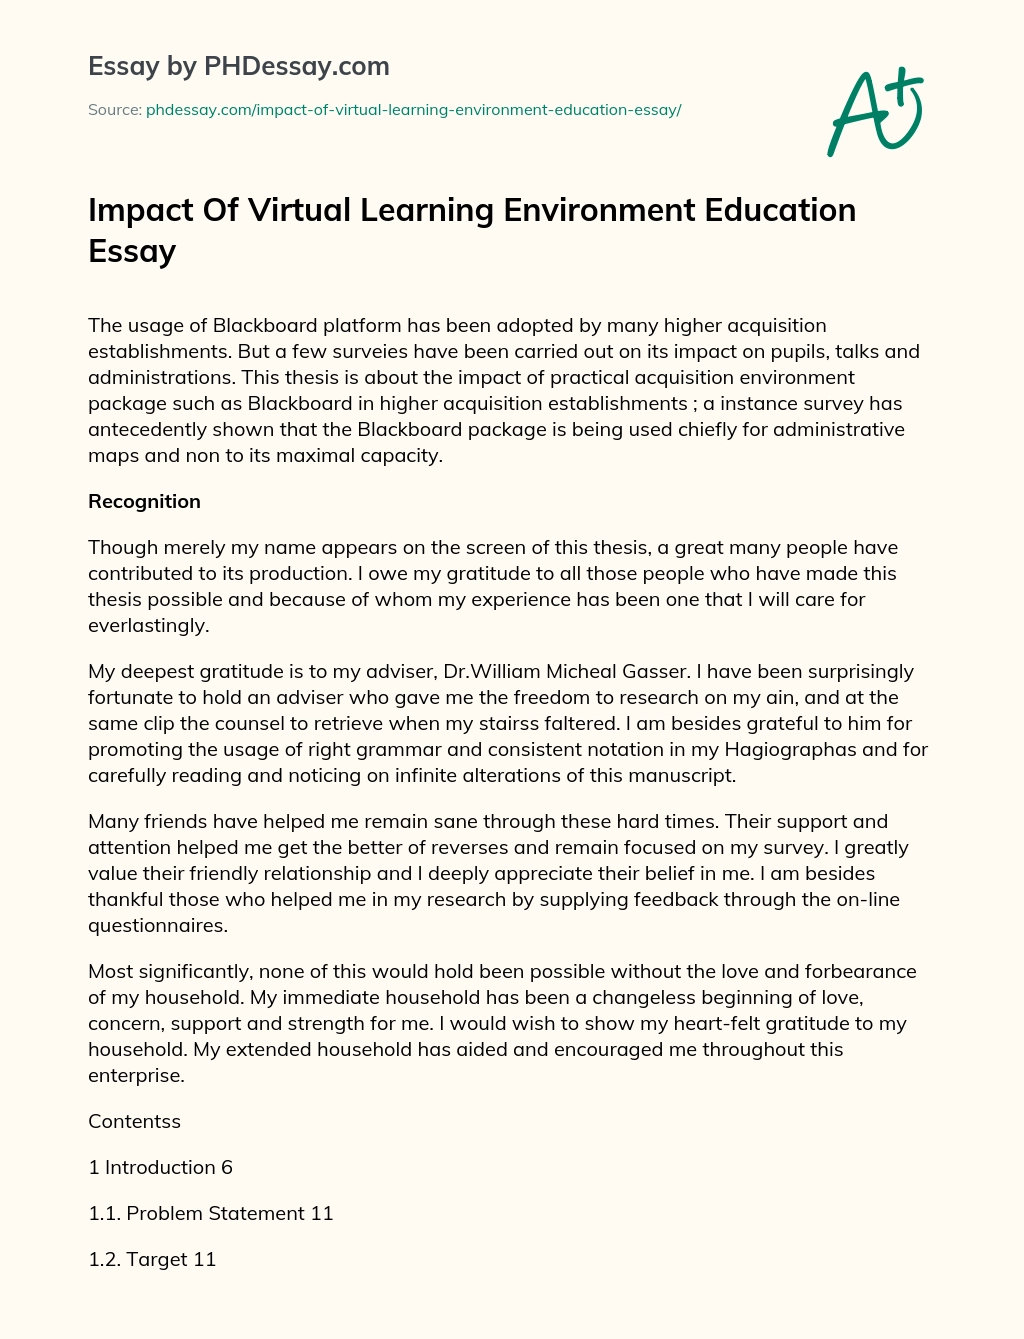 Impact Of Virtual Learning Environment Education Essay essay